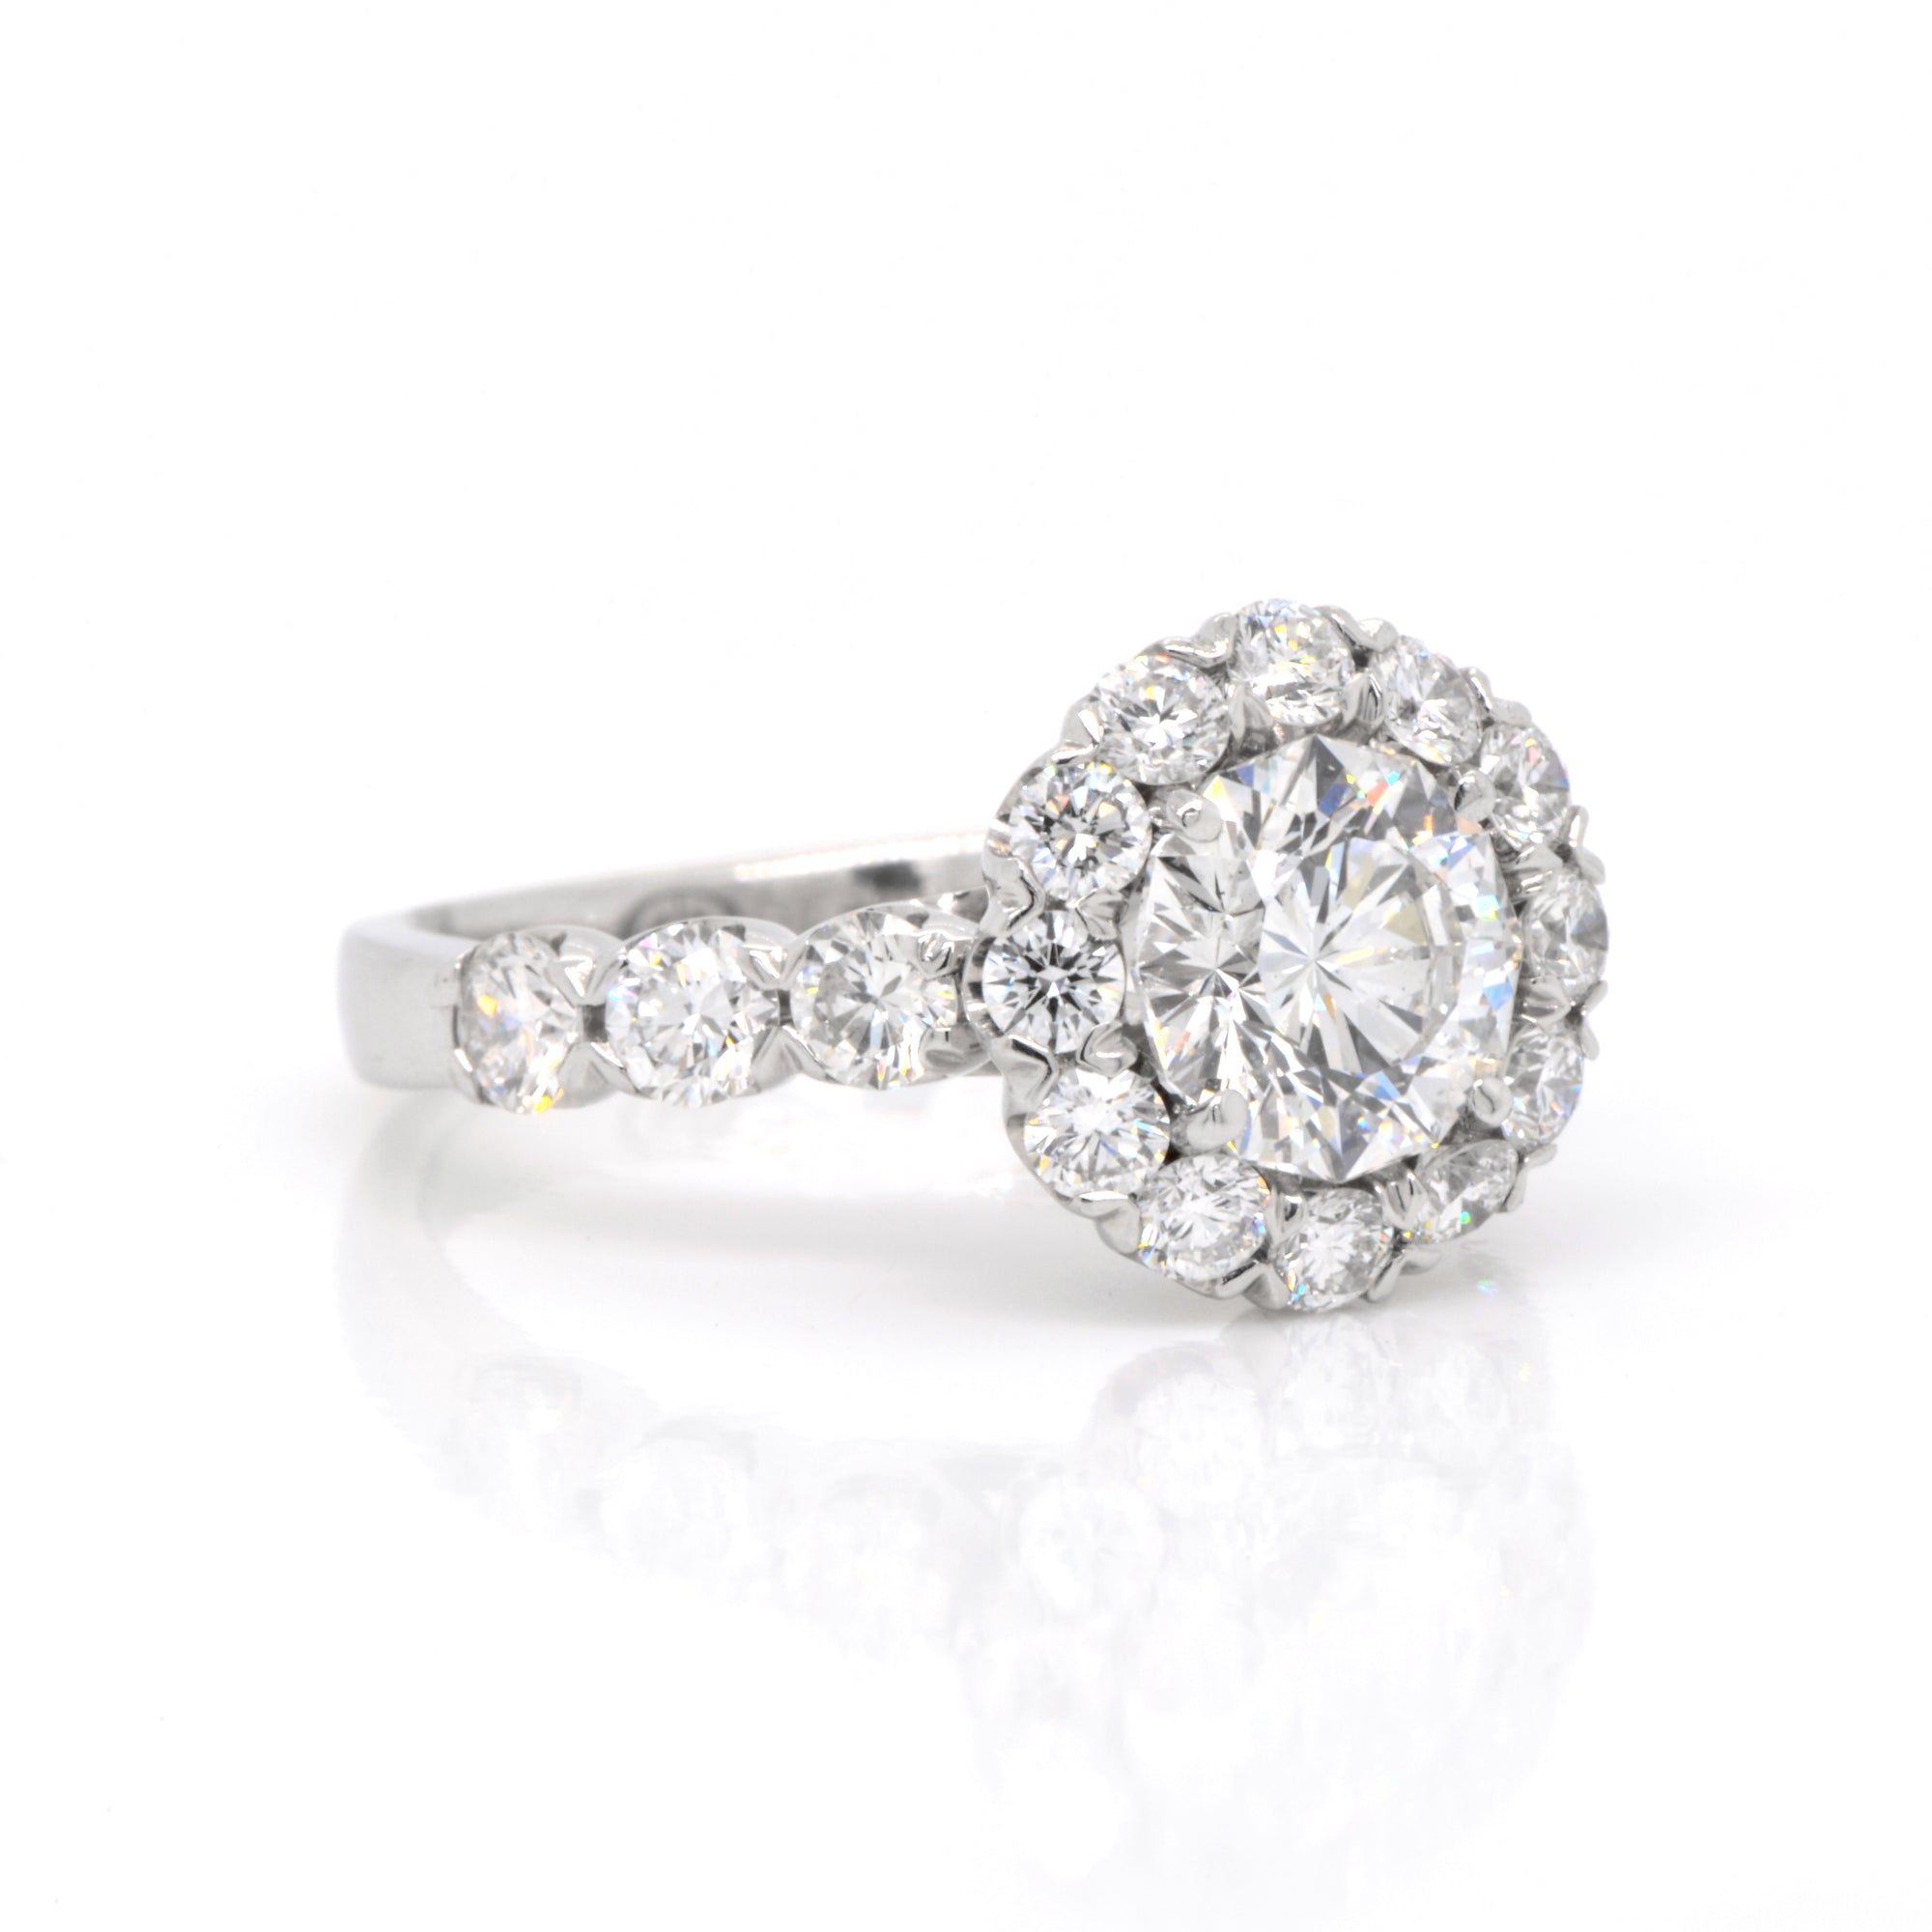 Christopher Designs platinum halo style round crisscut diamond engagement ring